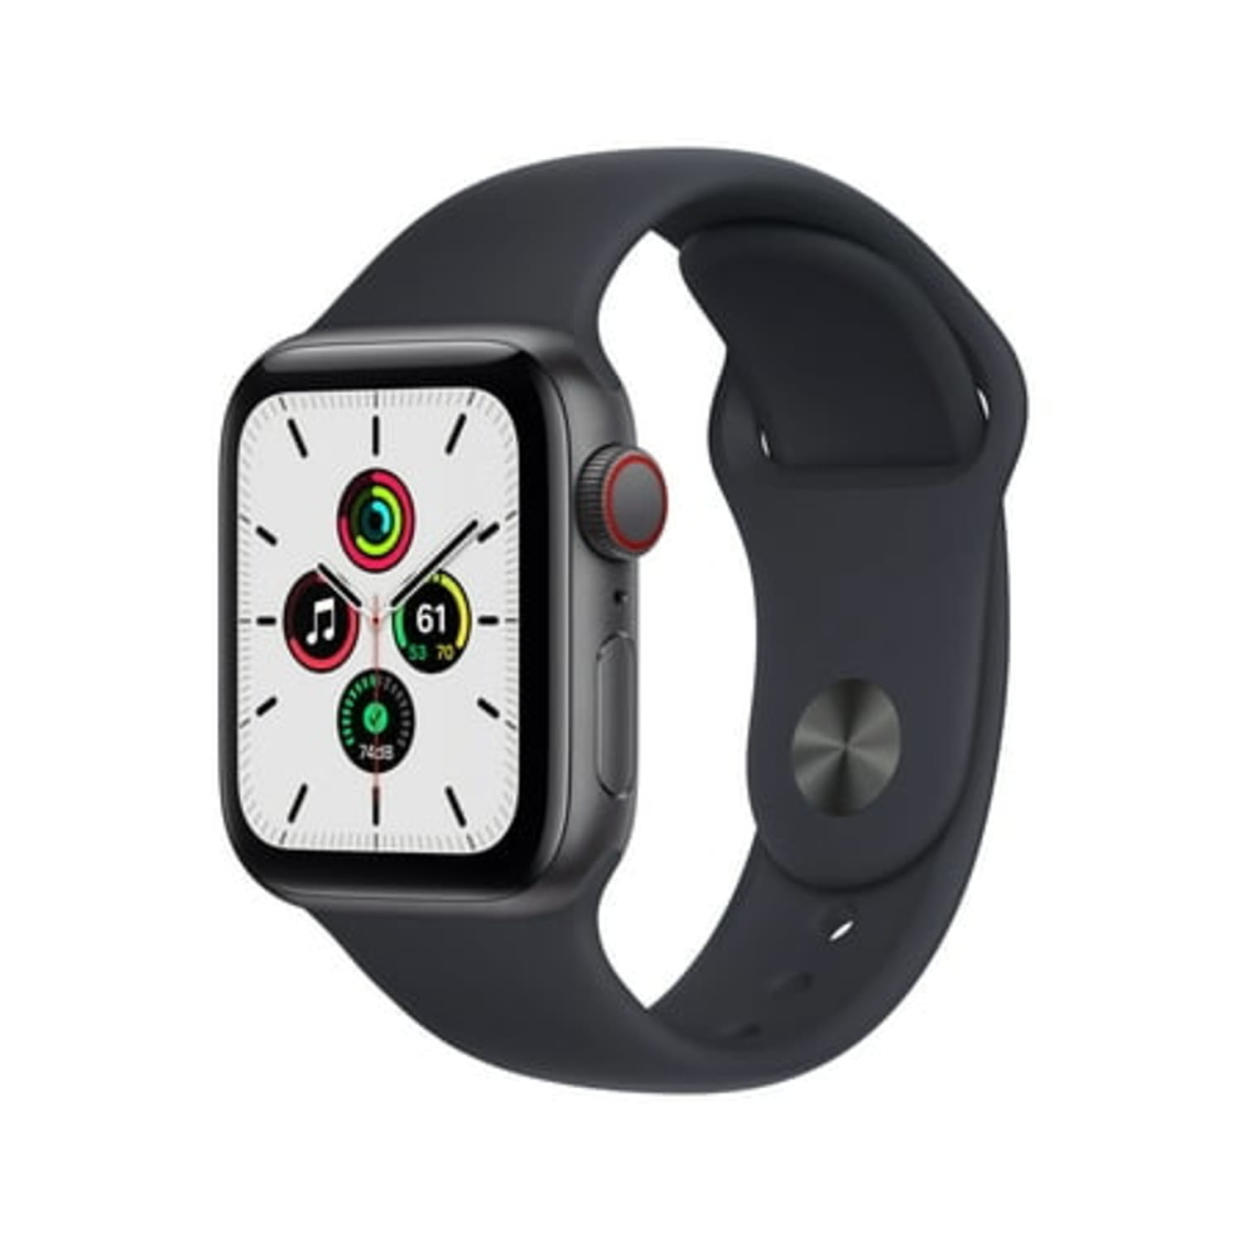 Apple Watch SE (1st Gen) GPS + Cellular 40mm Space Gray Aluminum Case Midnight Sport Band - Regular with Family Set Up (WALMART)